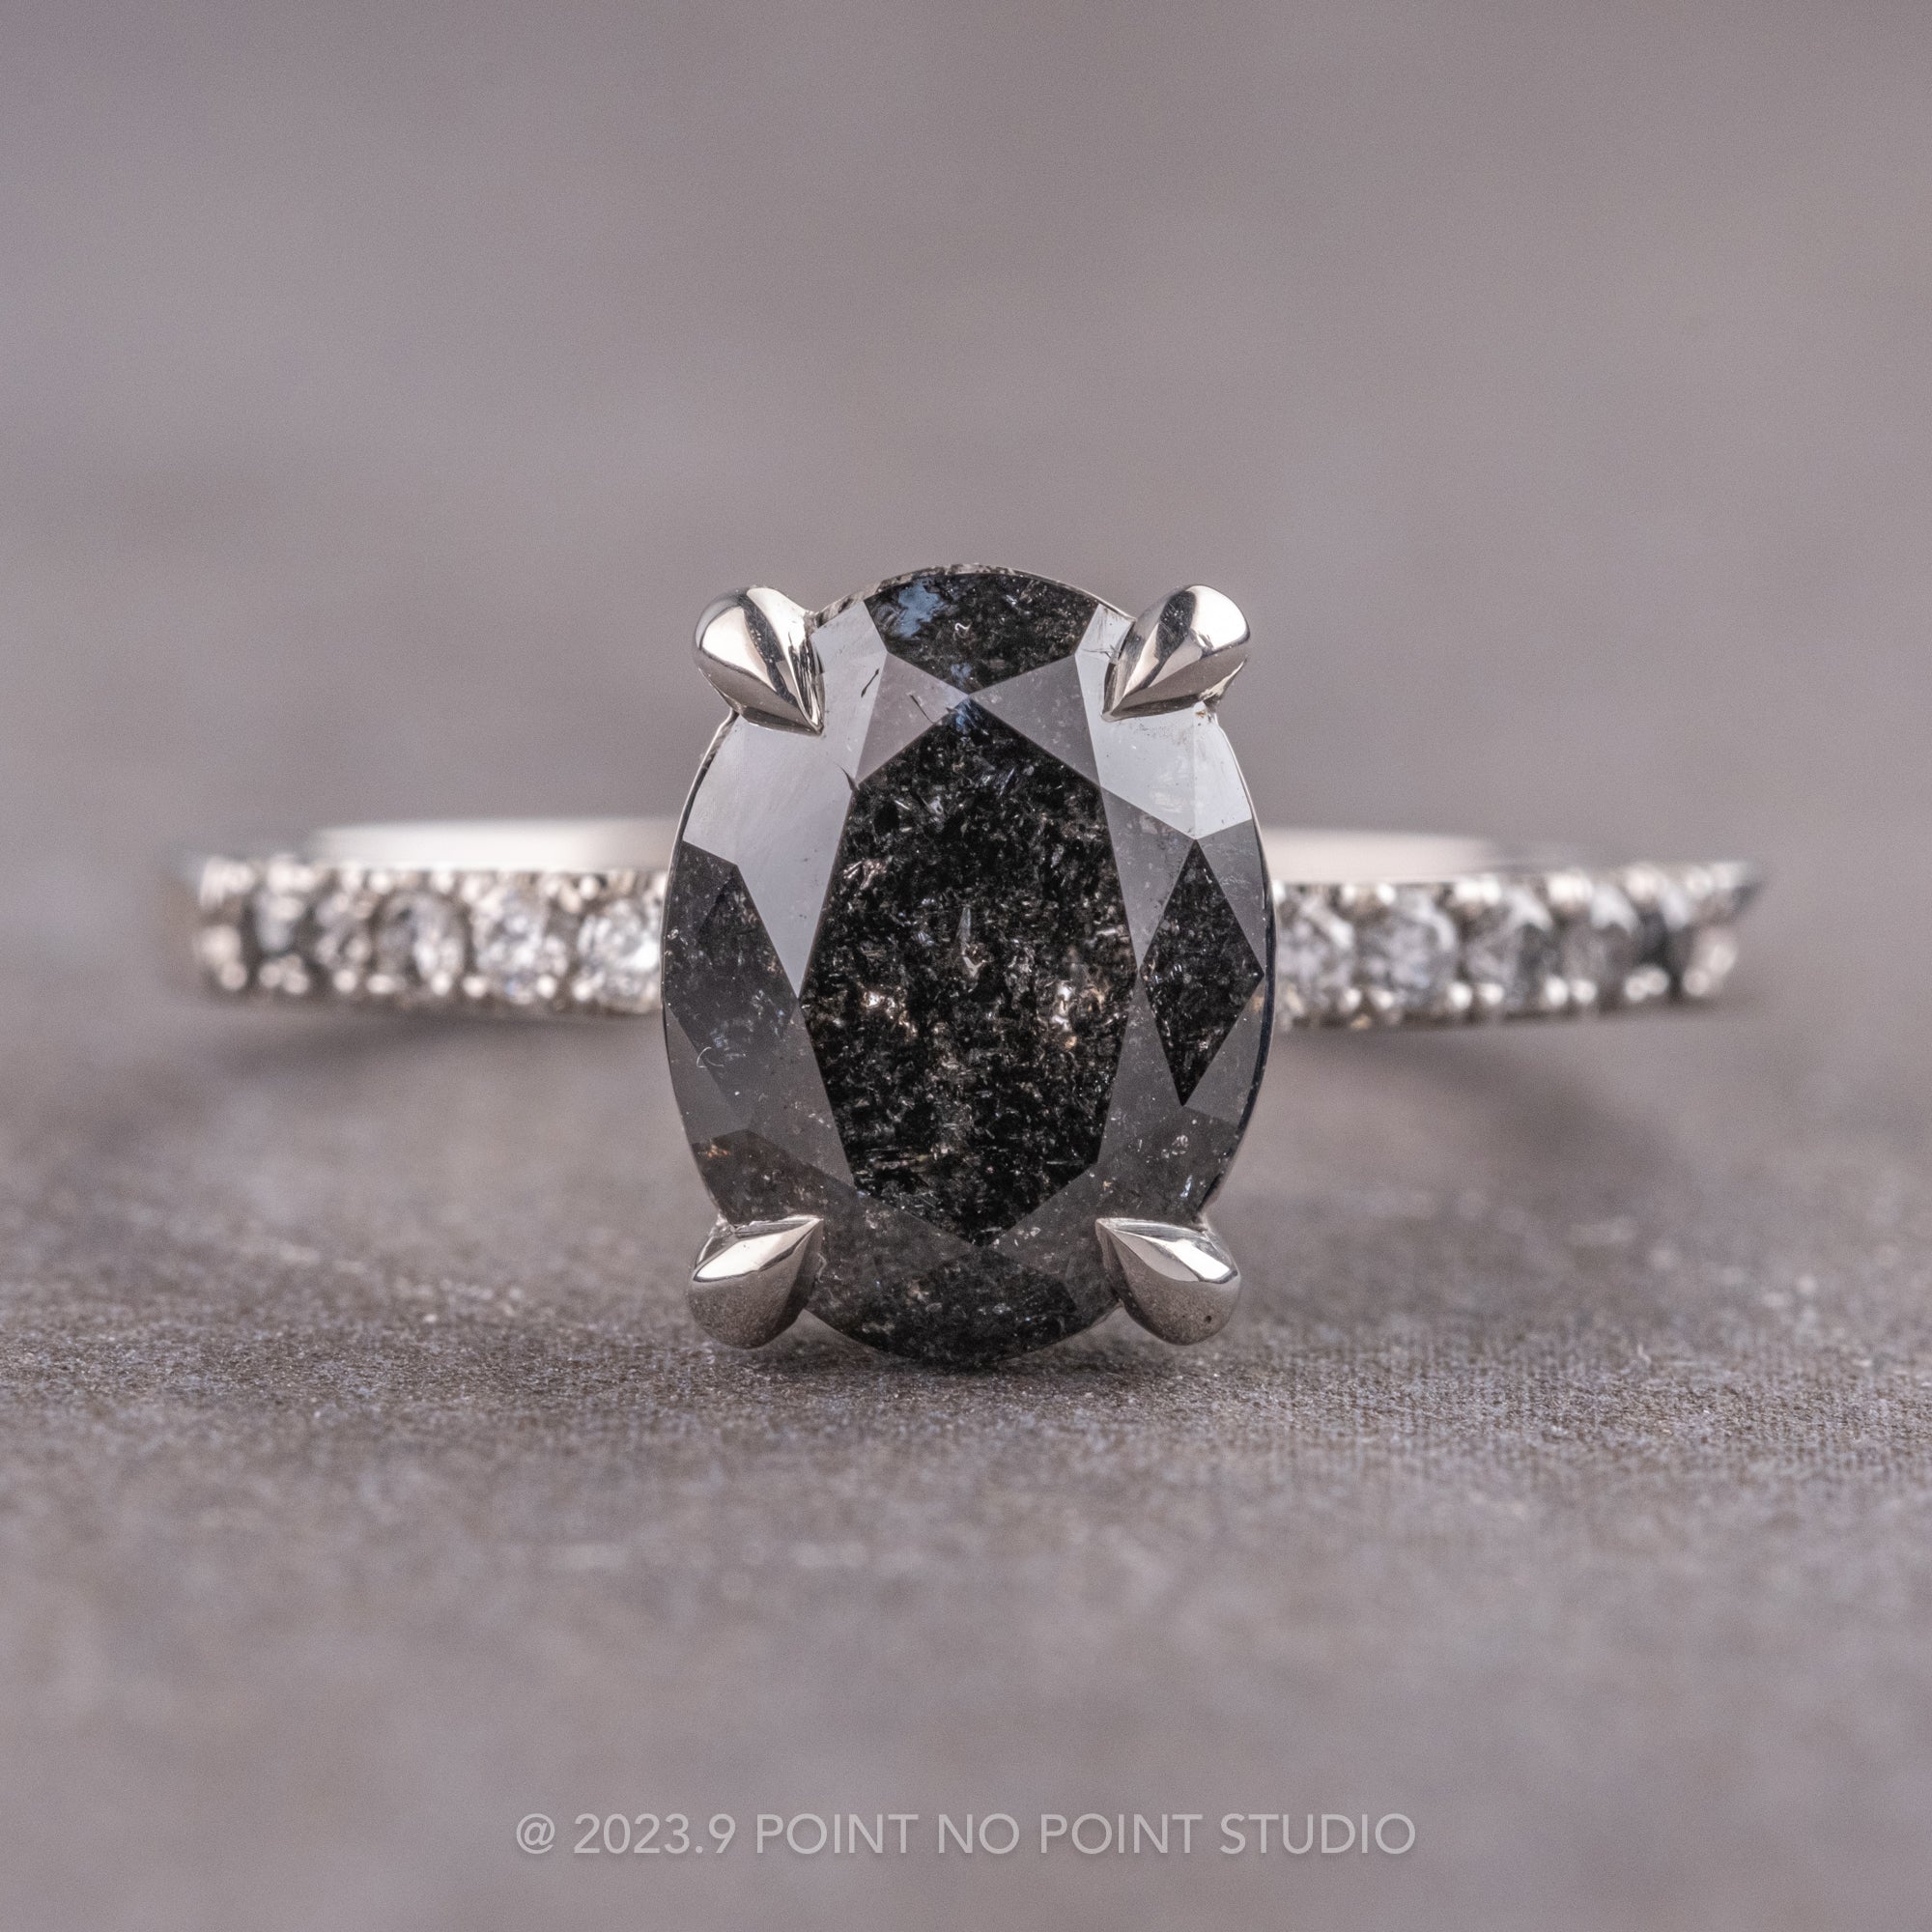 Gorgeous 1.38ct Cognac Diamond & Stunning Parade Design Floral Ring